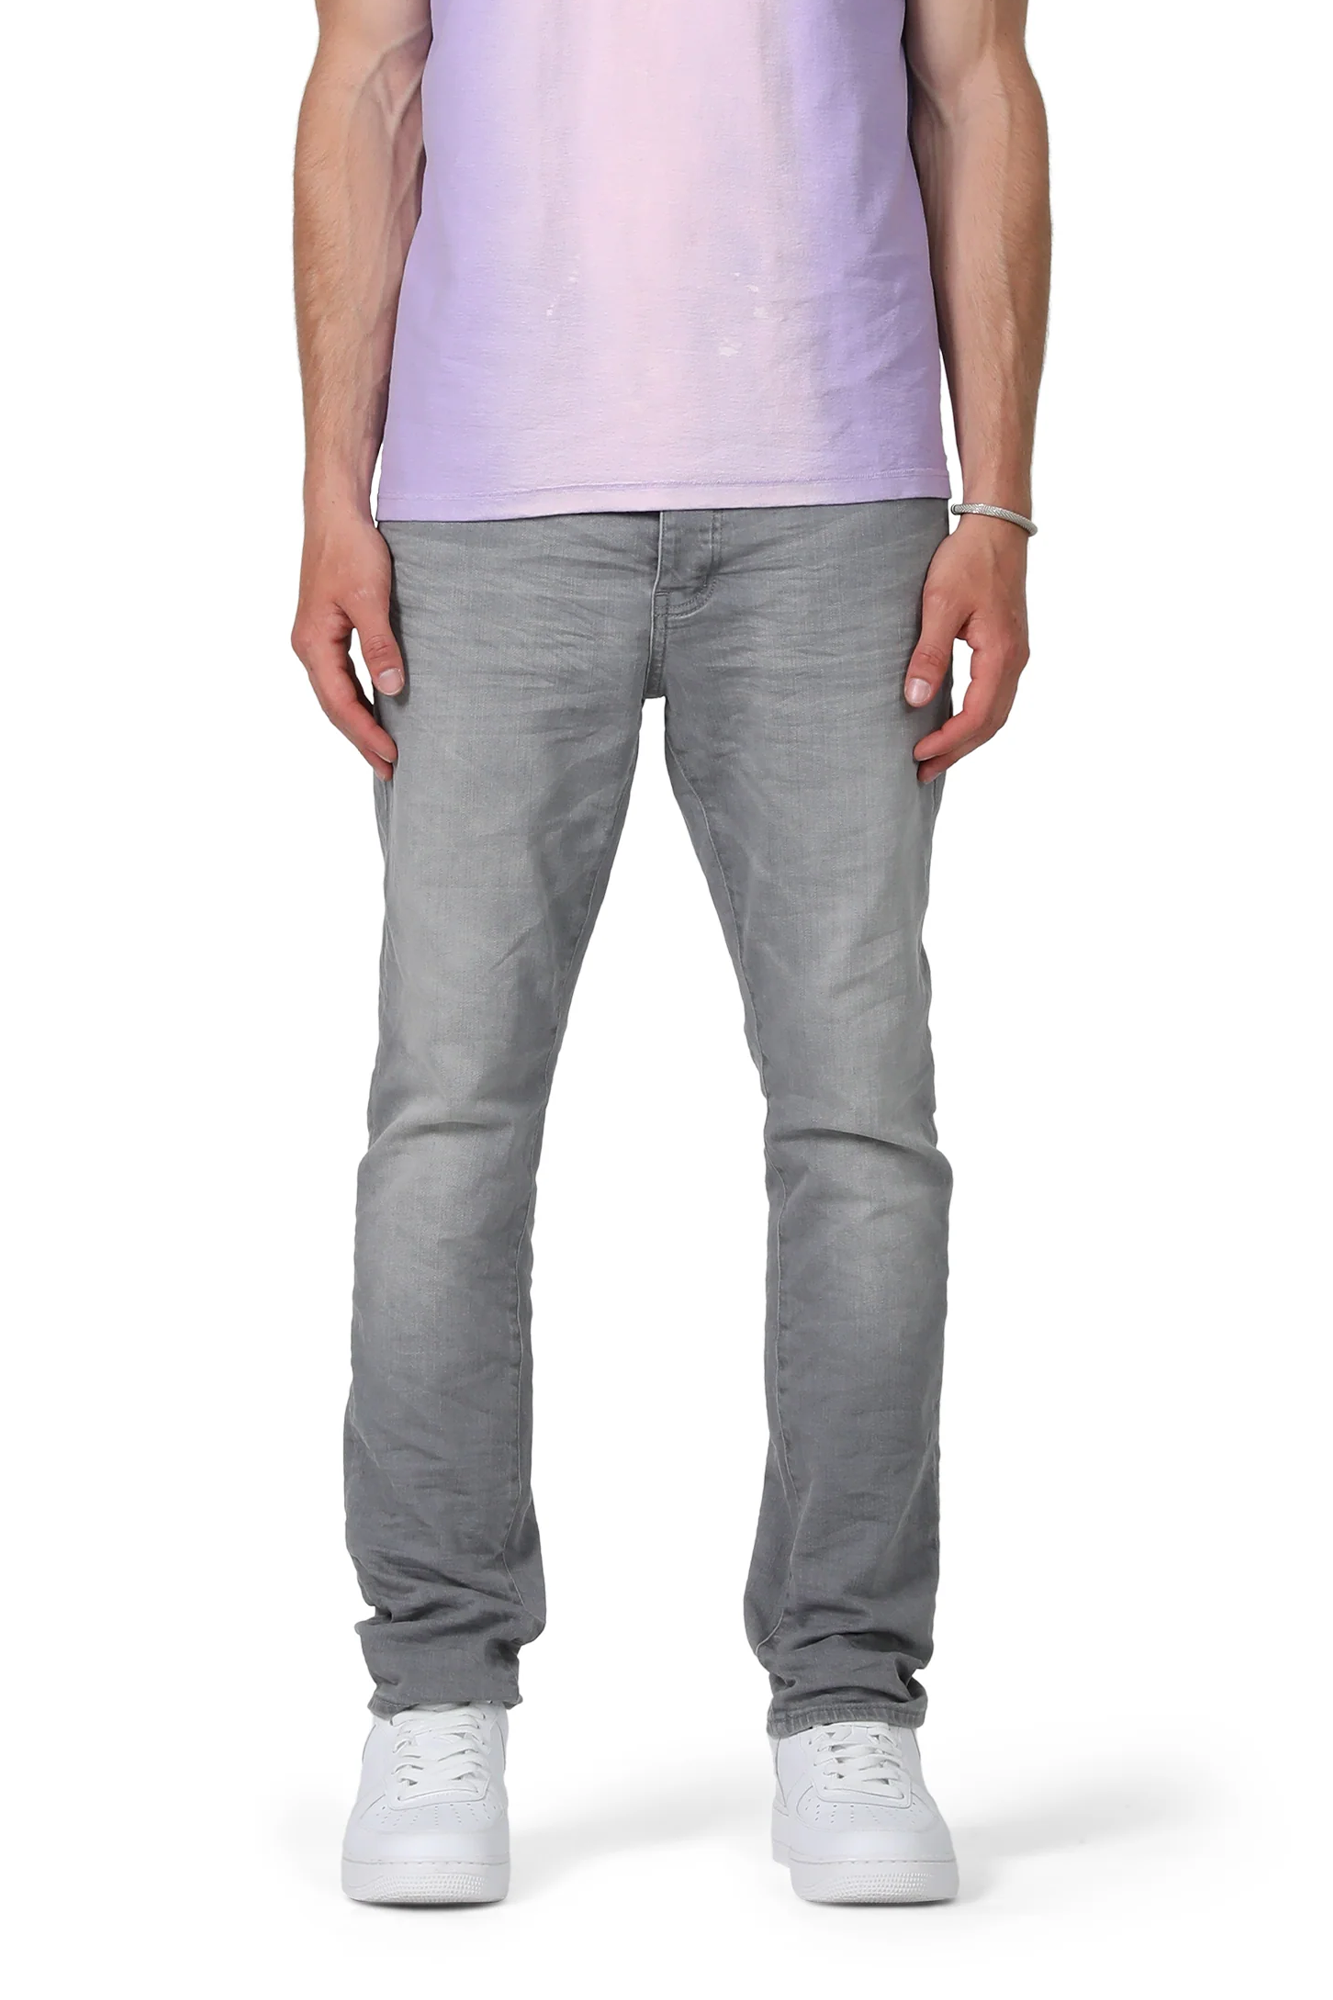 purple brand jeans Sizes 30-38